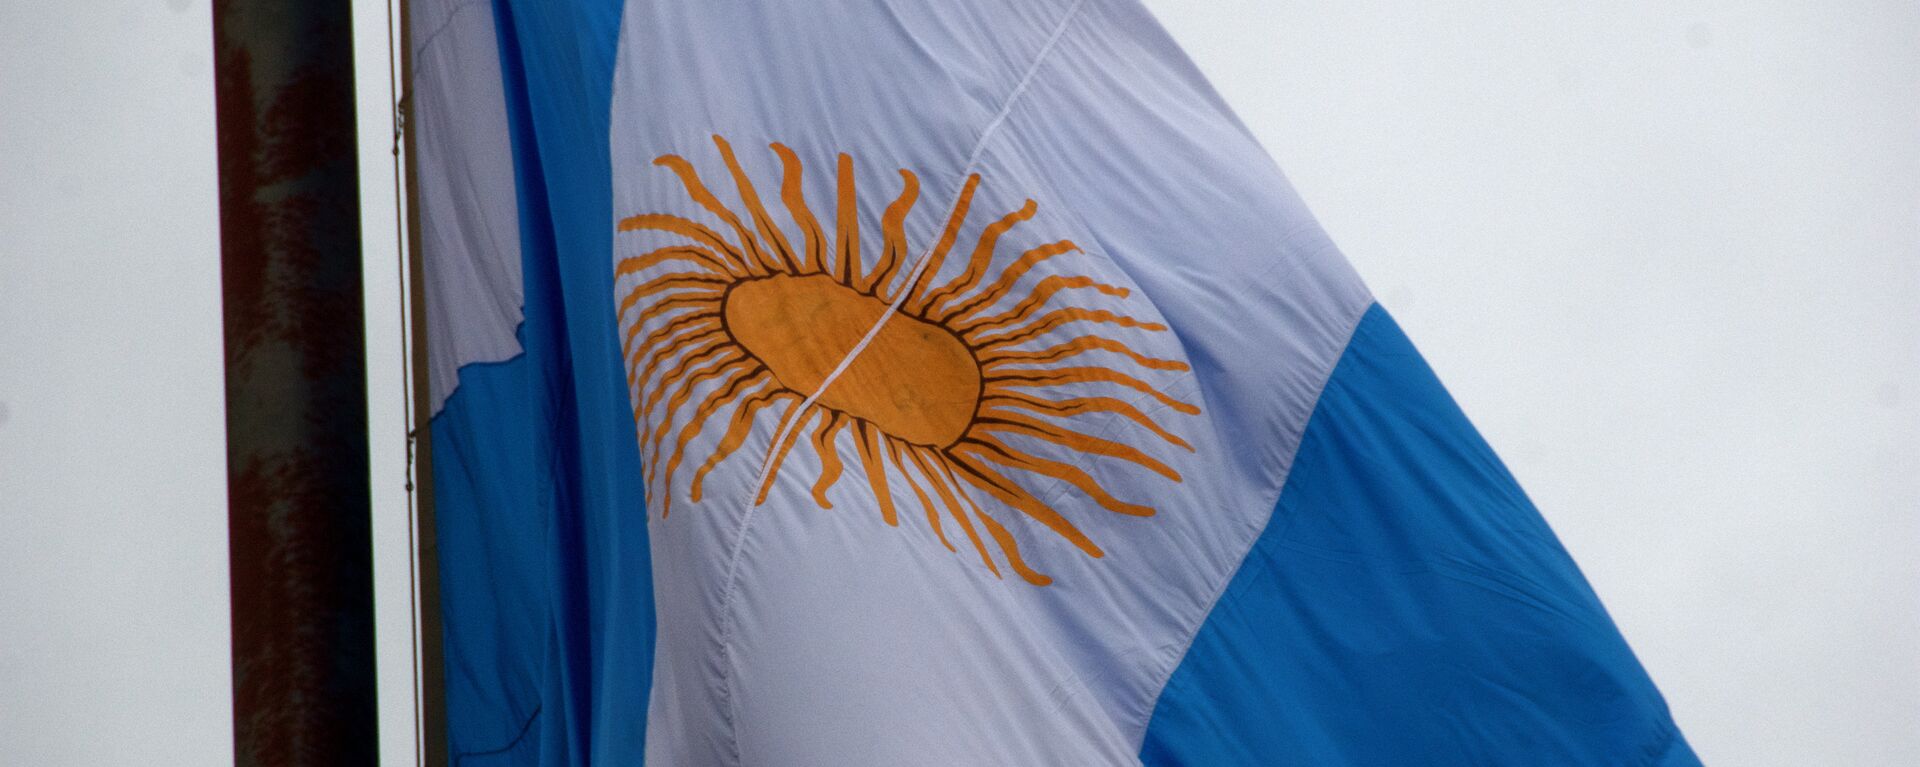 Bandera de Argentina - Sputnik Mundo, 1920, 24.07.2021